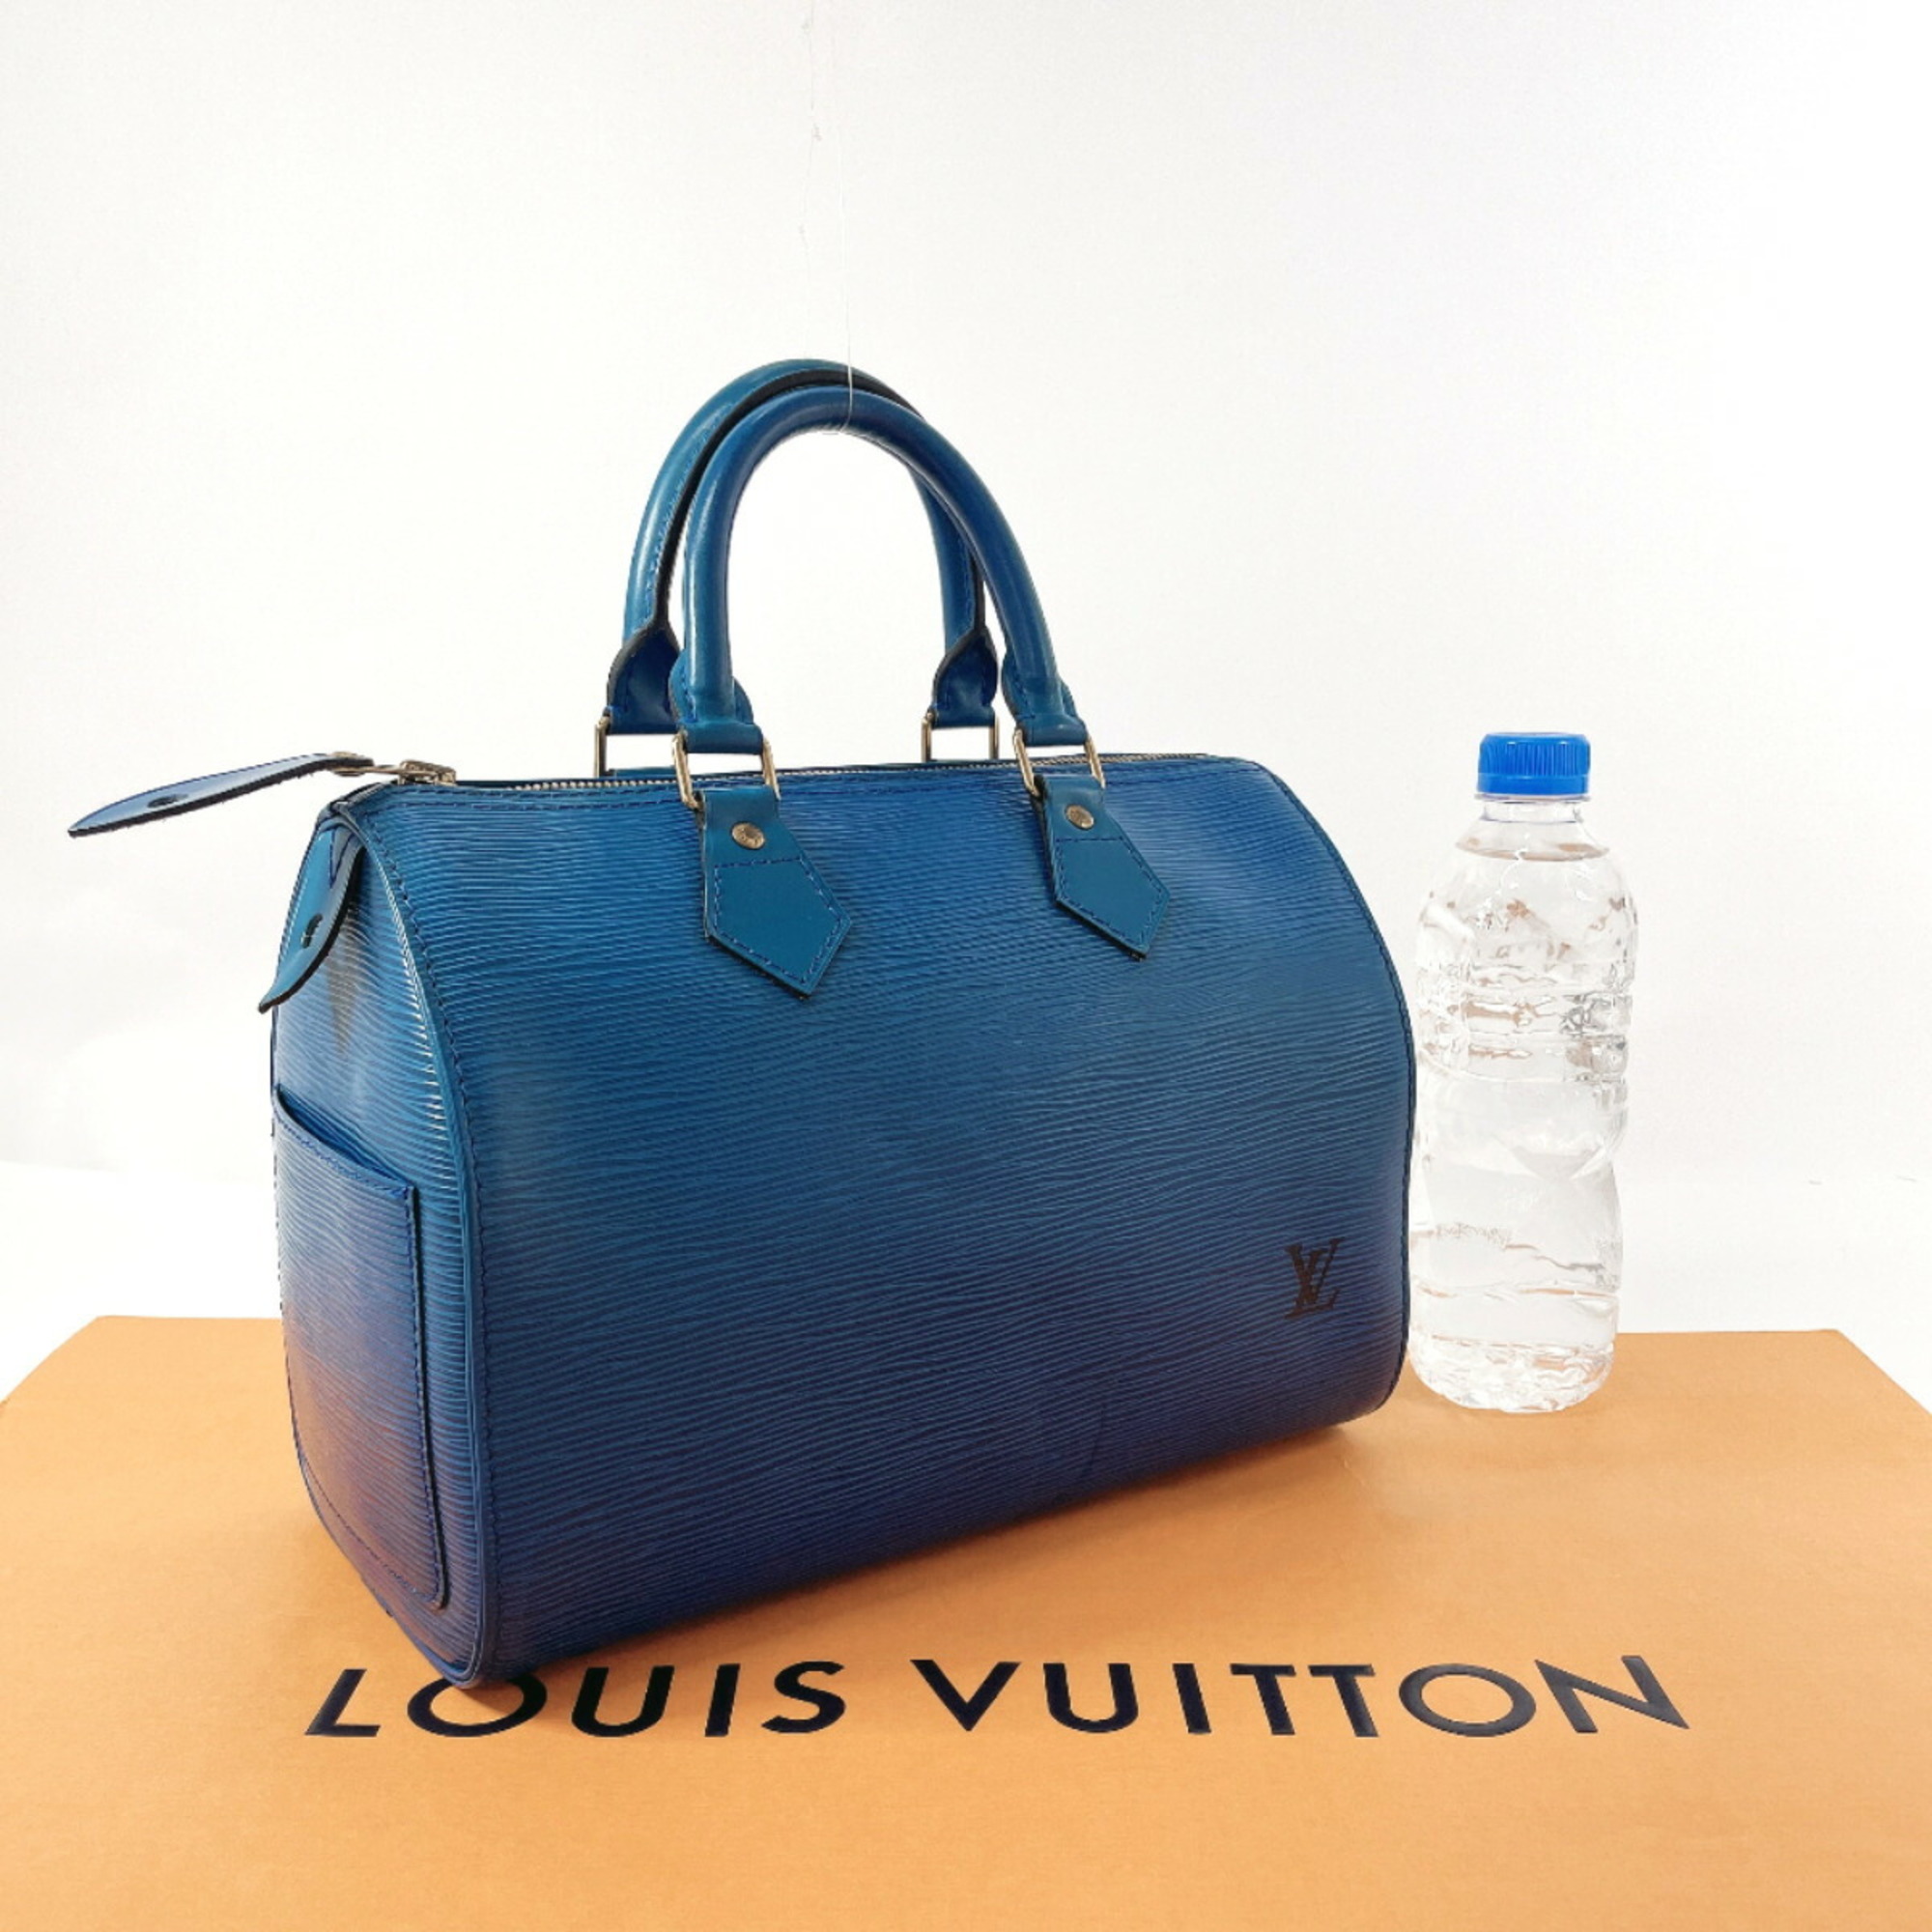 LOUIS VUITTON Louis Vuitton Speedy 25 M43015 Handbag Epi Leather Blue Women's